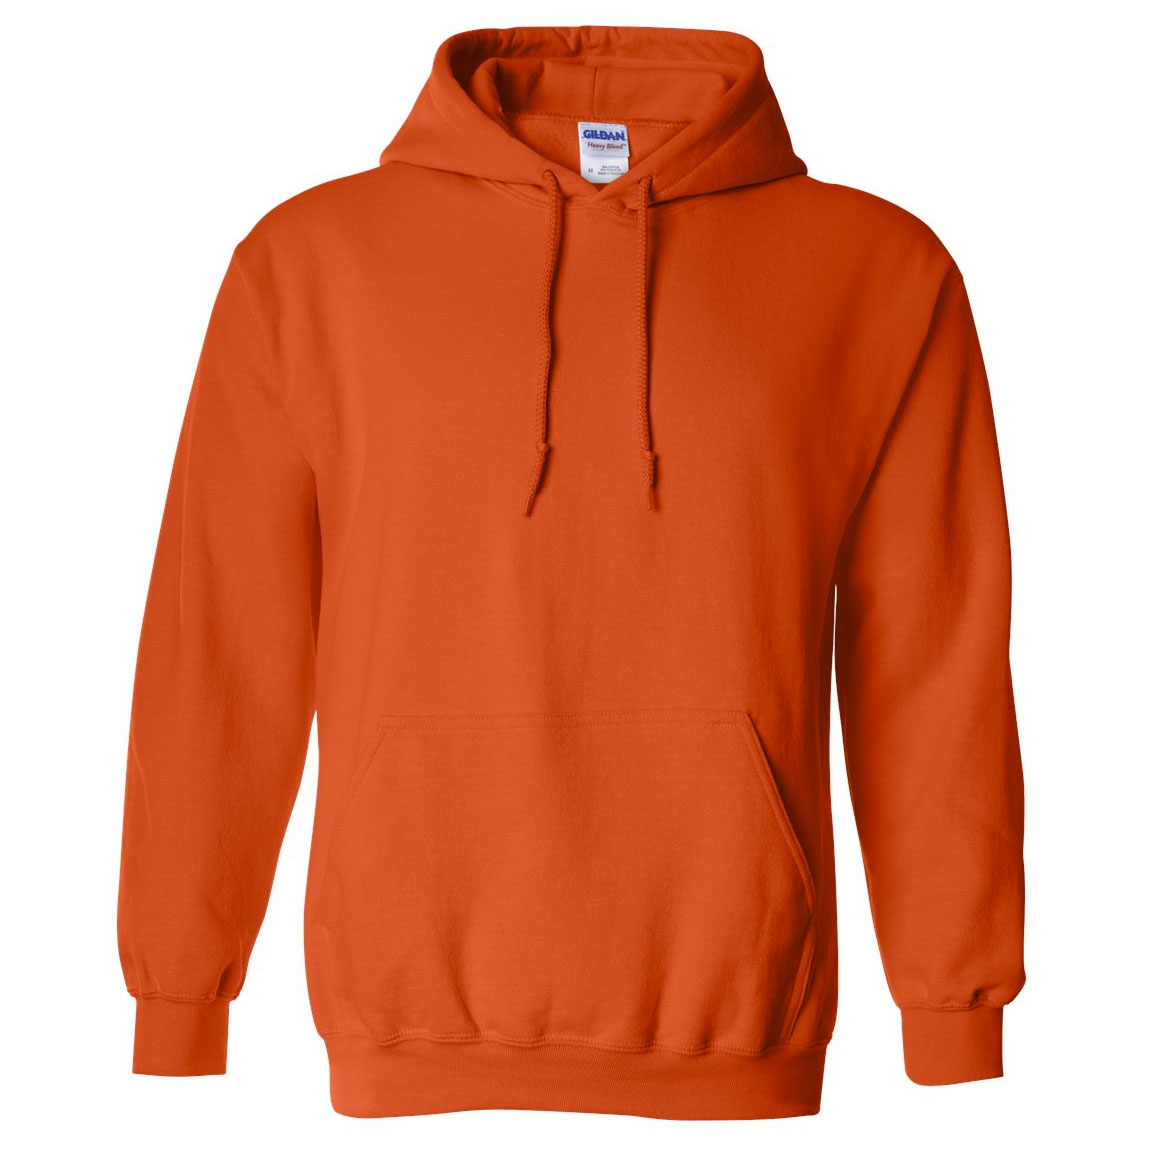 Gildan Heavy Blend Adult Hooded Sweatshirt 18500/88500 - Shirts and ...